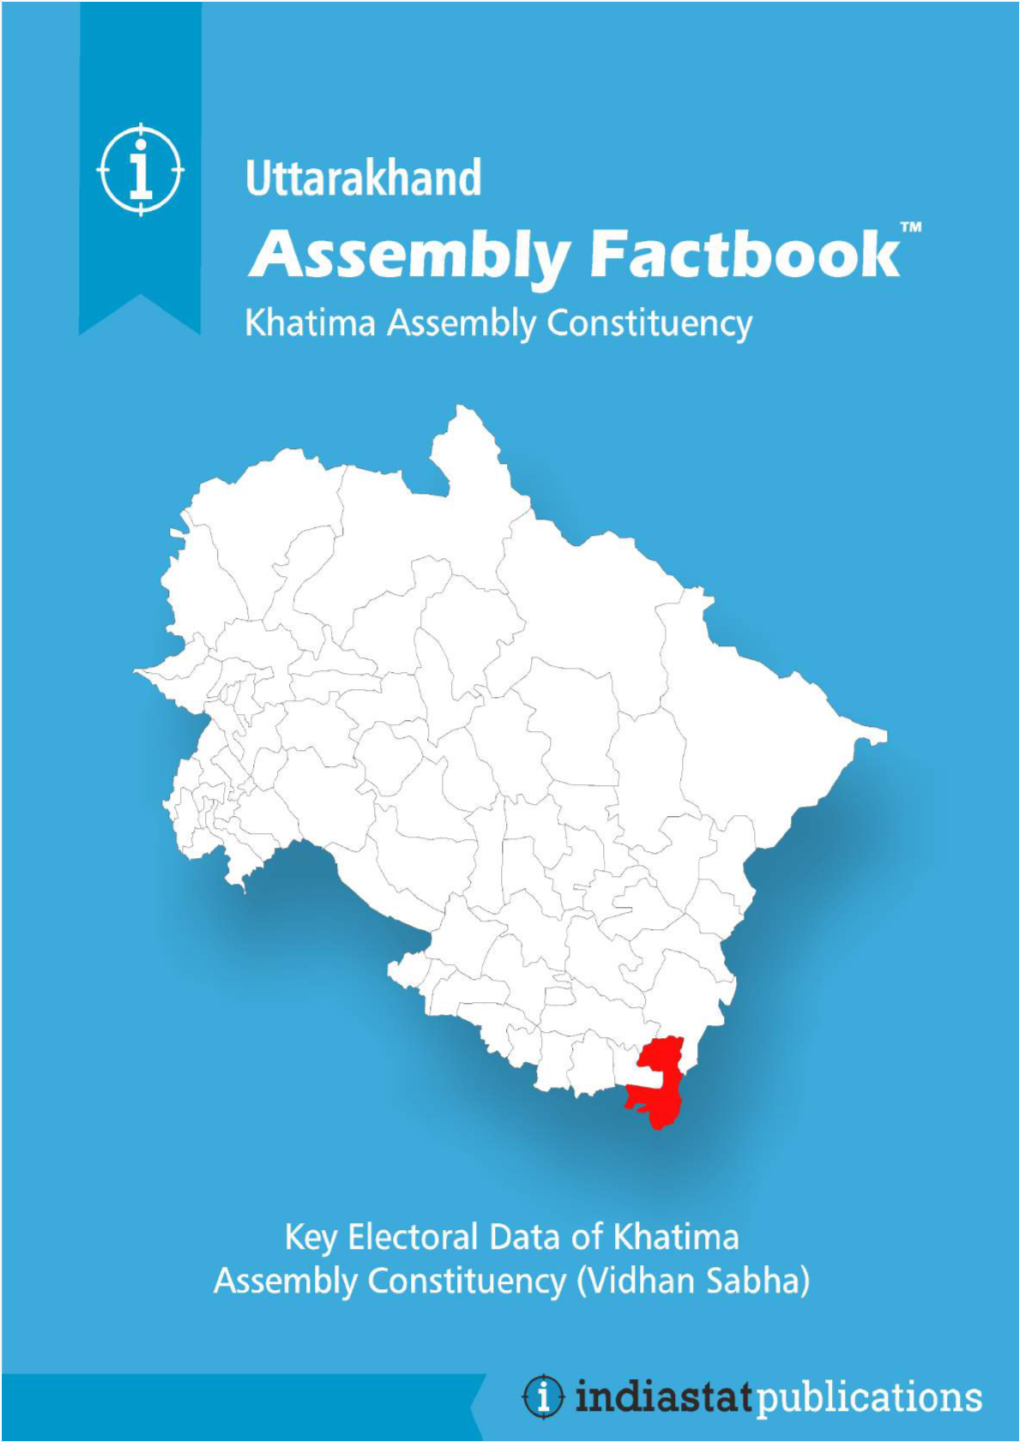 Khatima Assembly Uttarakhand Factbook